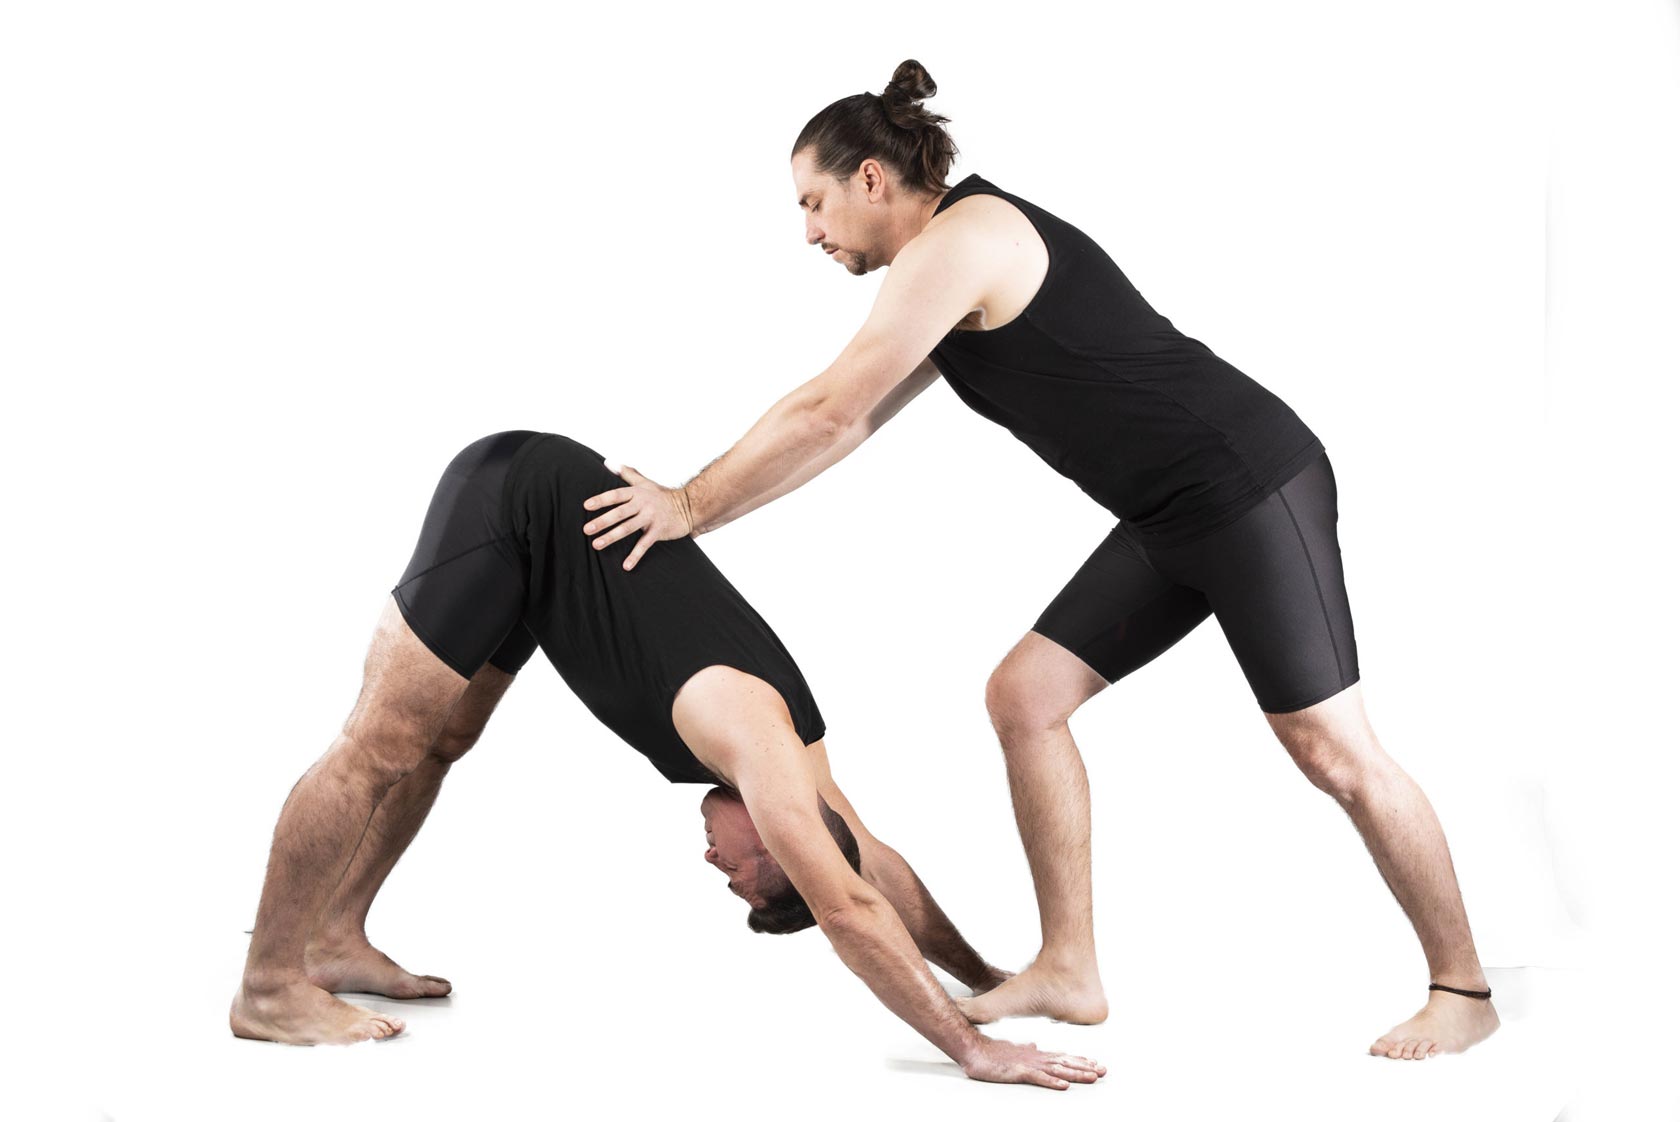 ejemplo del curso de ajustes de yoga para profesores en sevilla